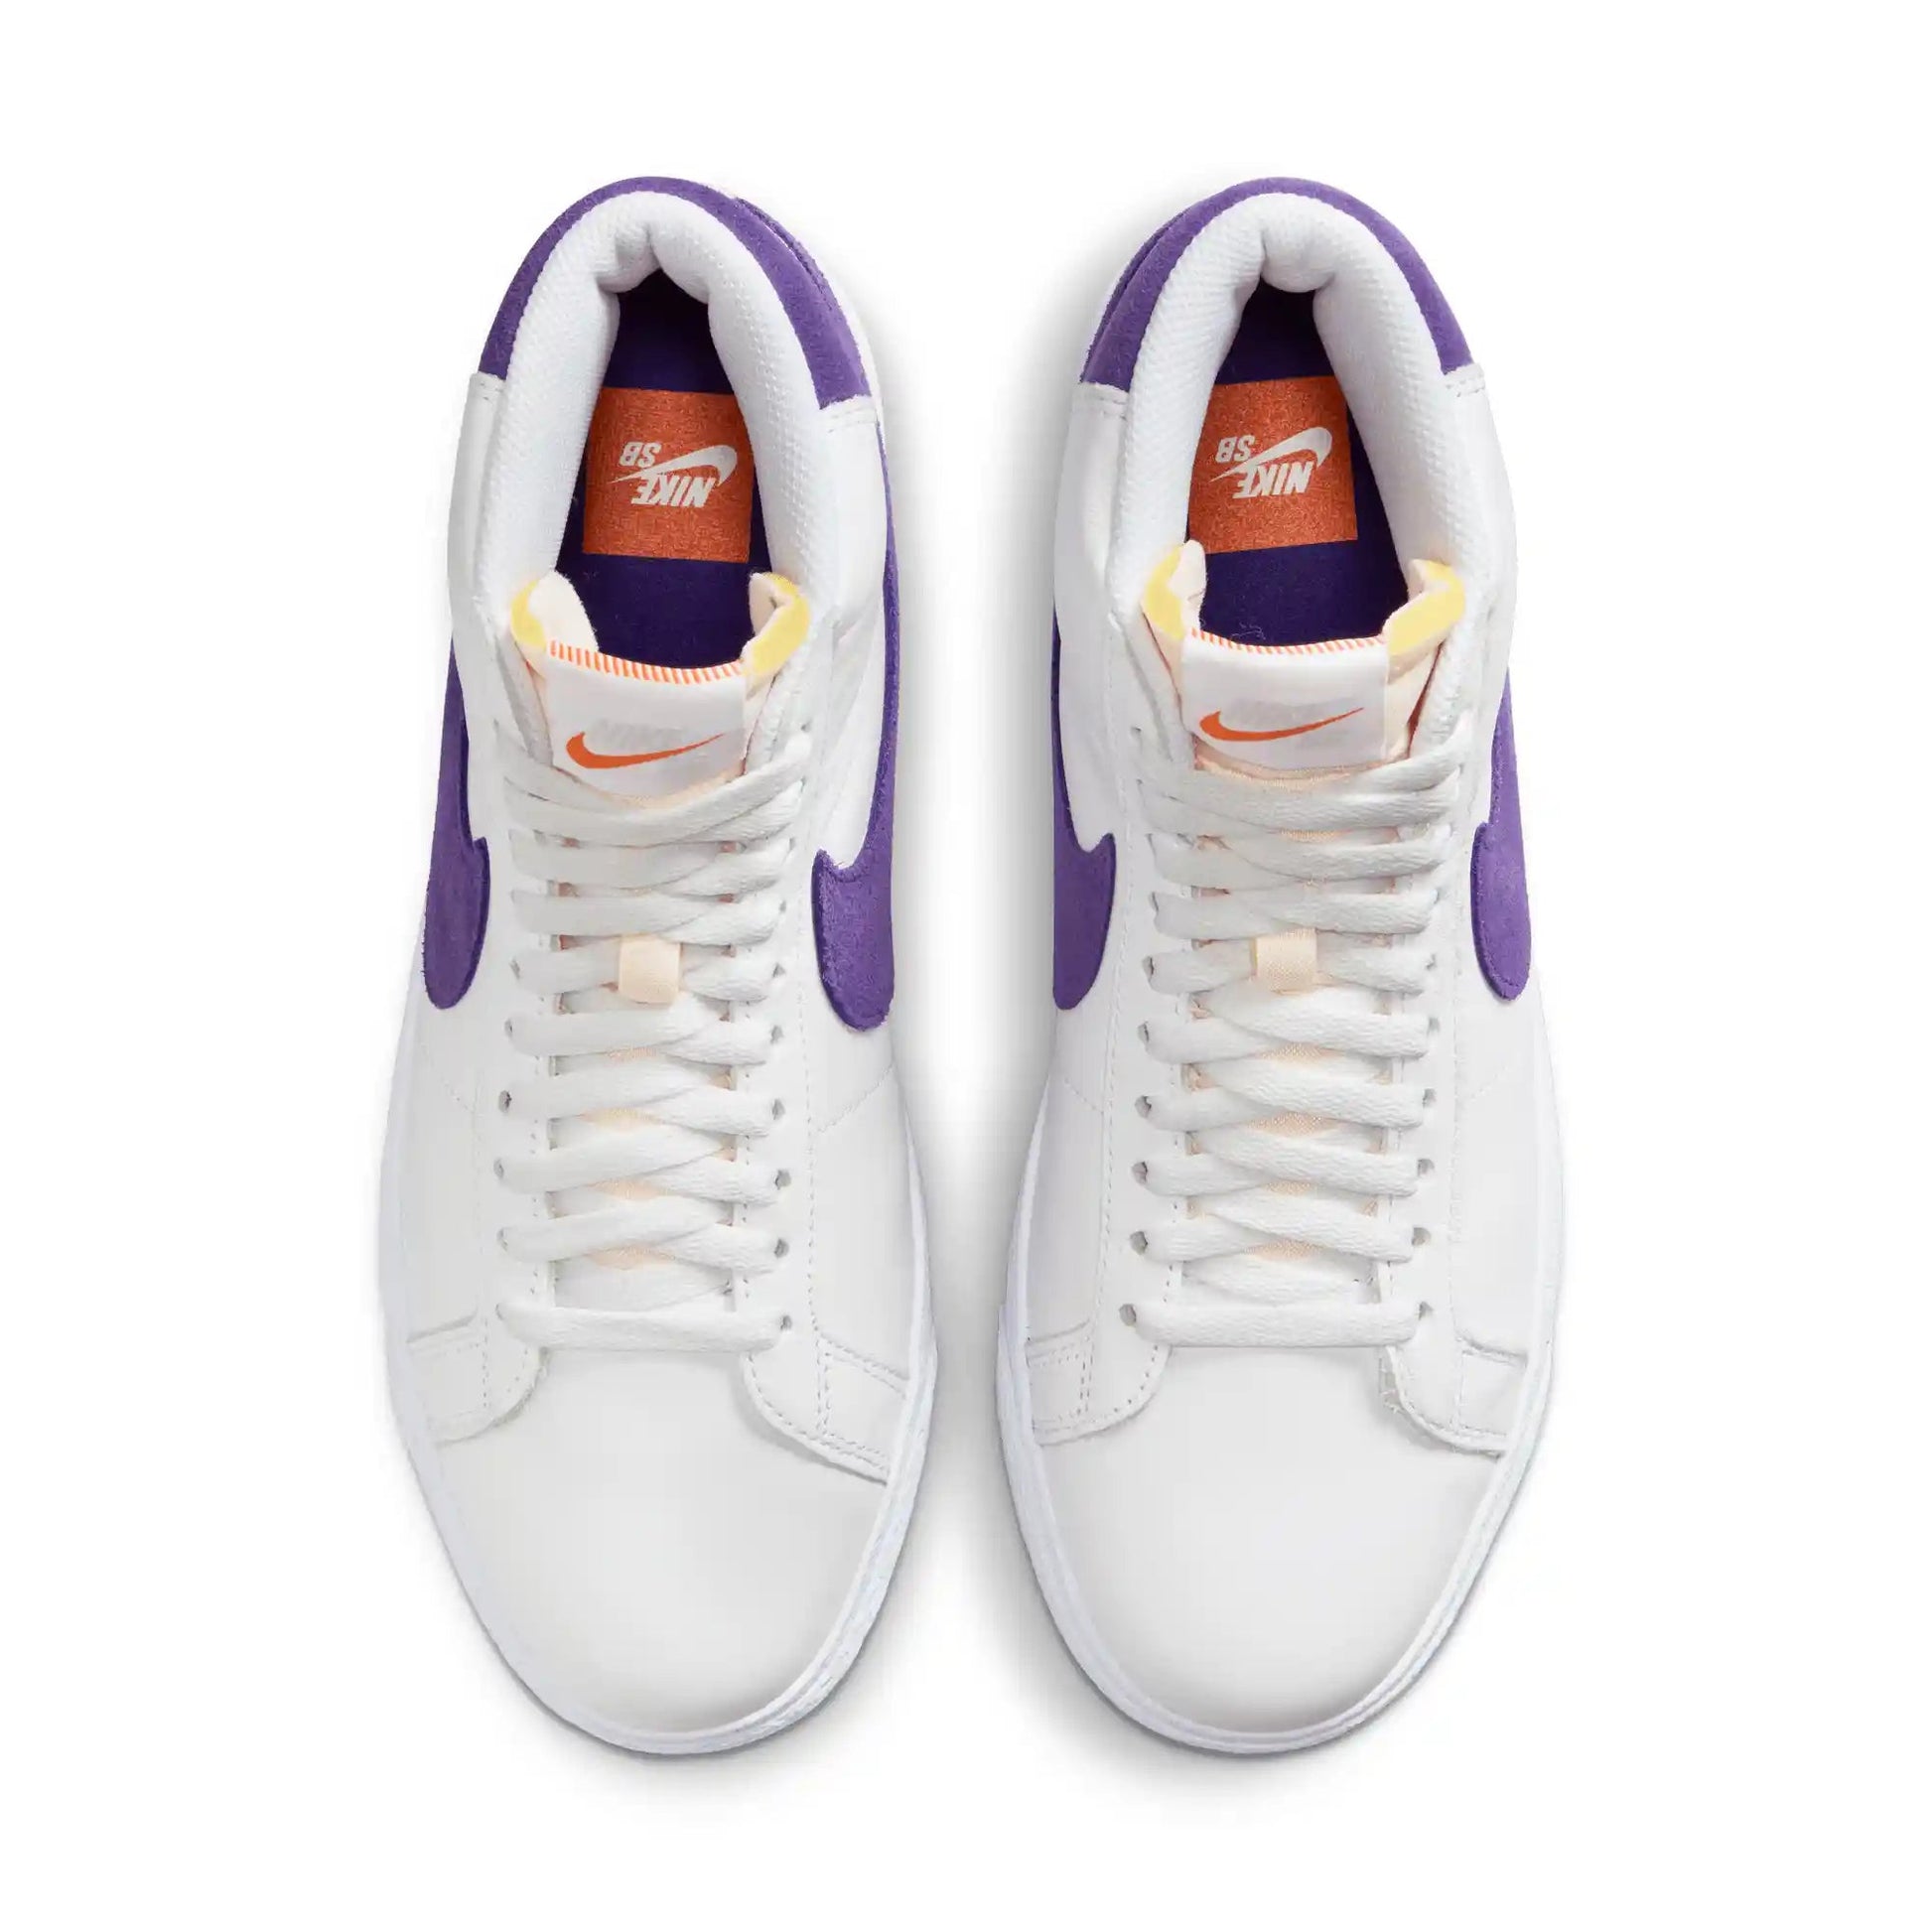 Nike SB Zoom Blazer Mid, white/court purple-white-gum light brown - Tiki Room Skateboards - 4